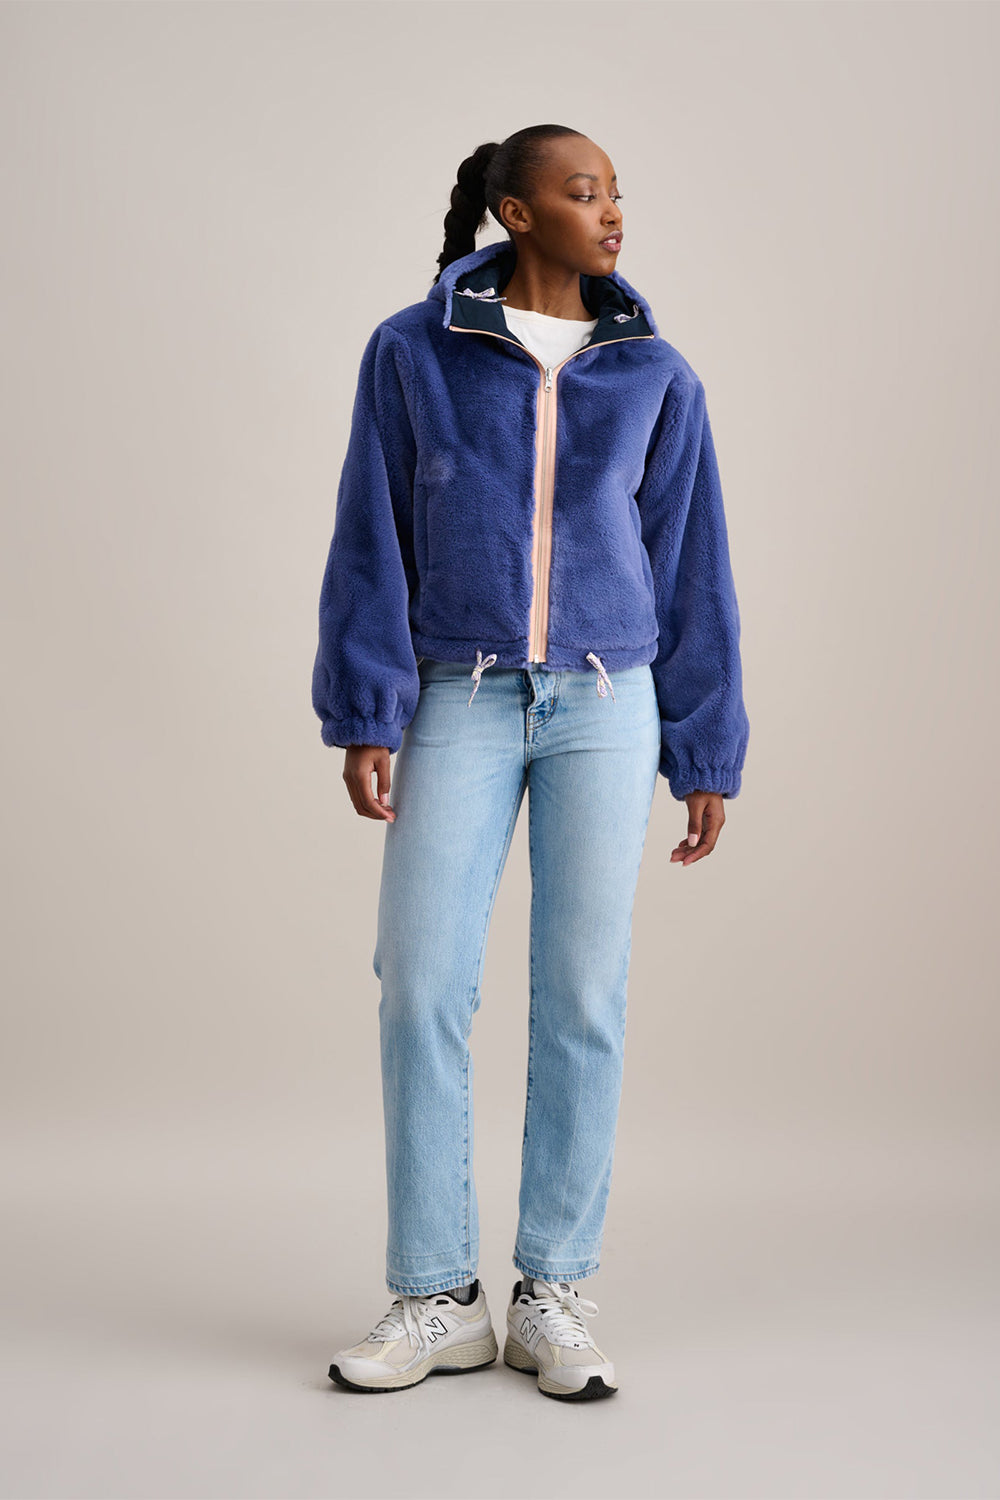 Womens jacket | Bellerose Loud jacket | The Standard Store